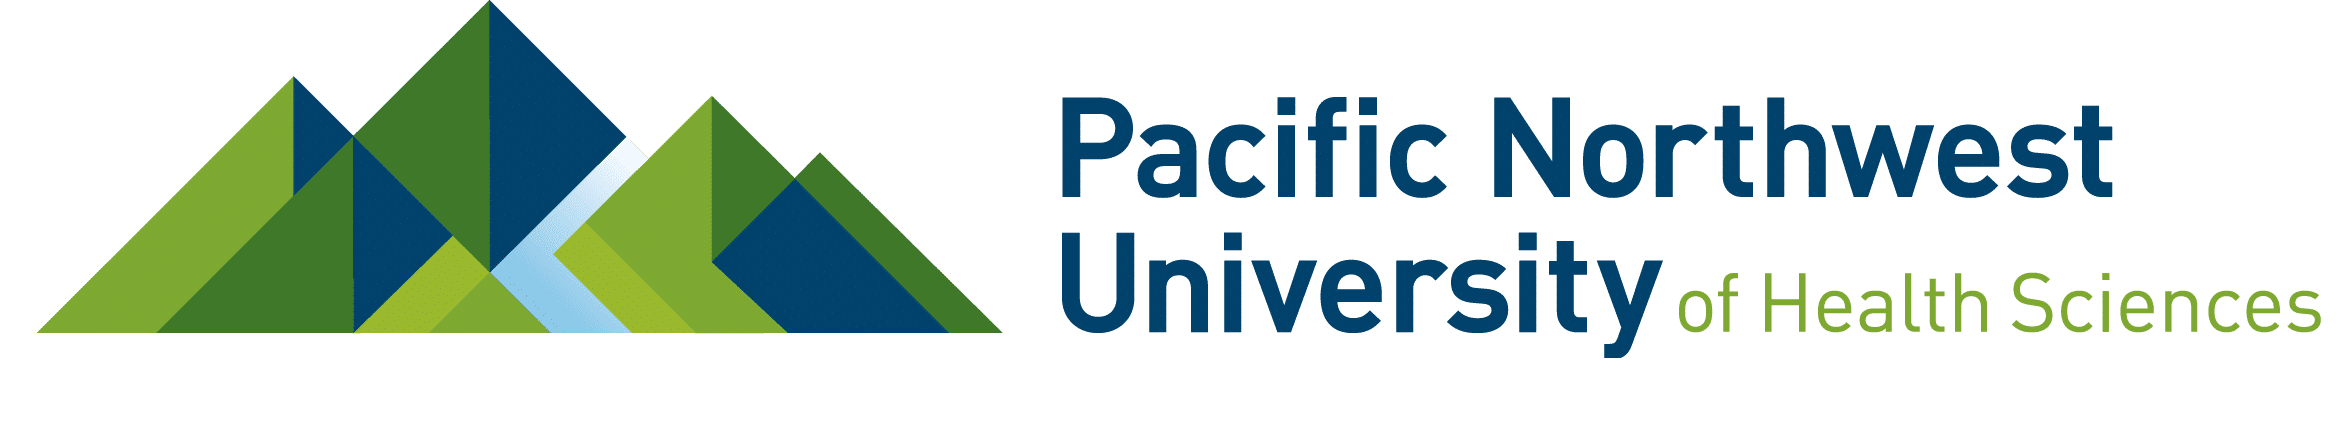 pacific northwest university